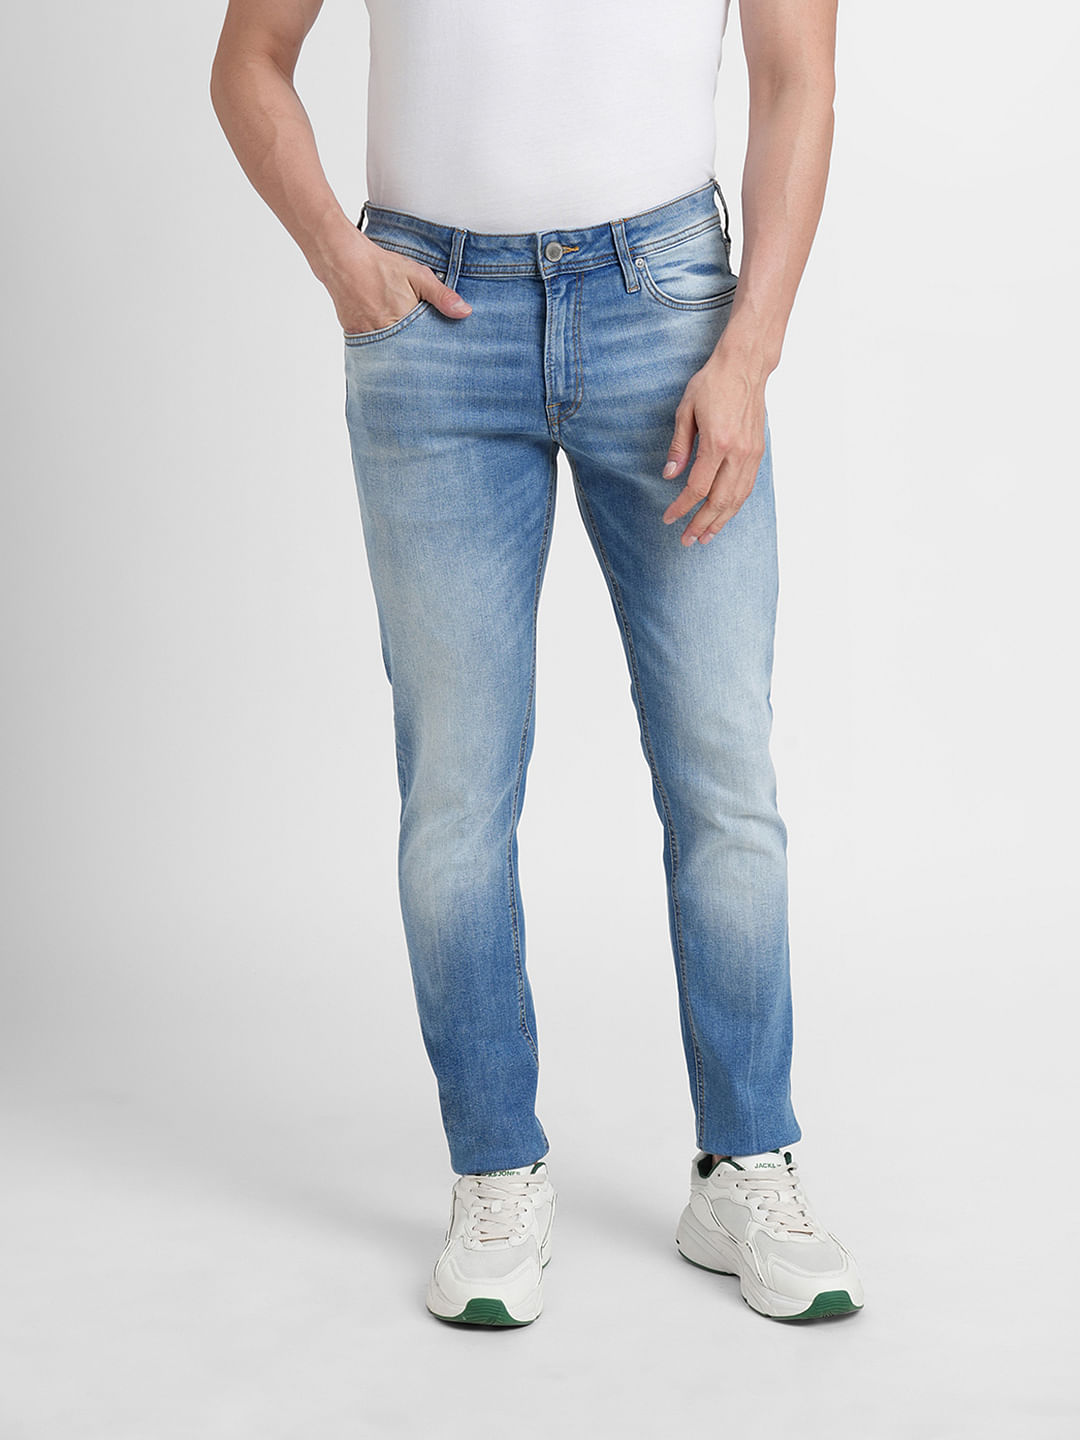 Buy Blue Jeans for Men by MEGHZ Online | Ajio.com